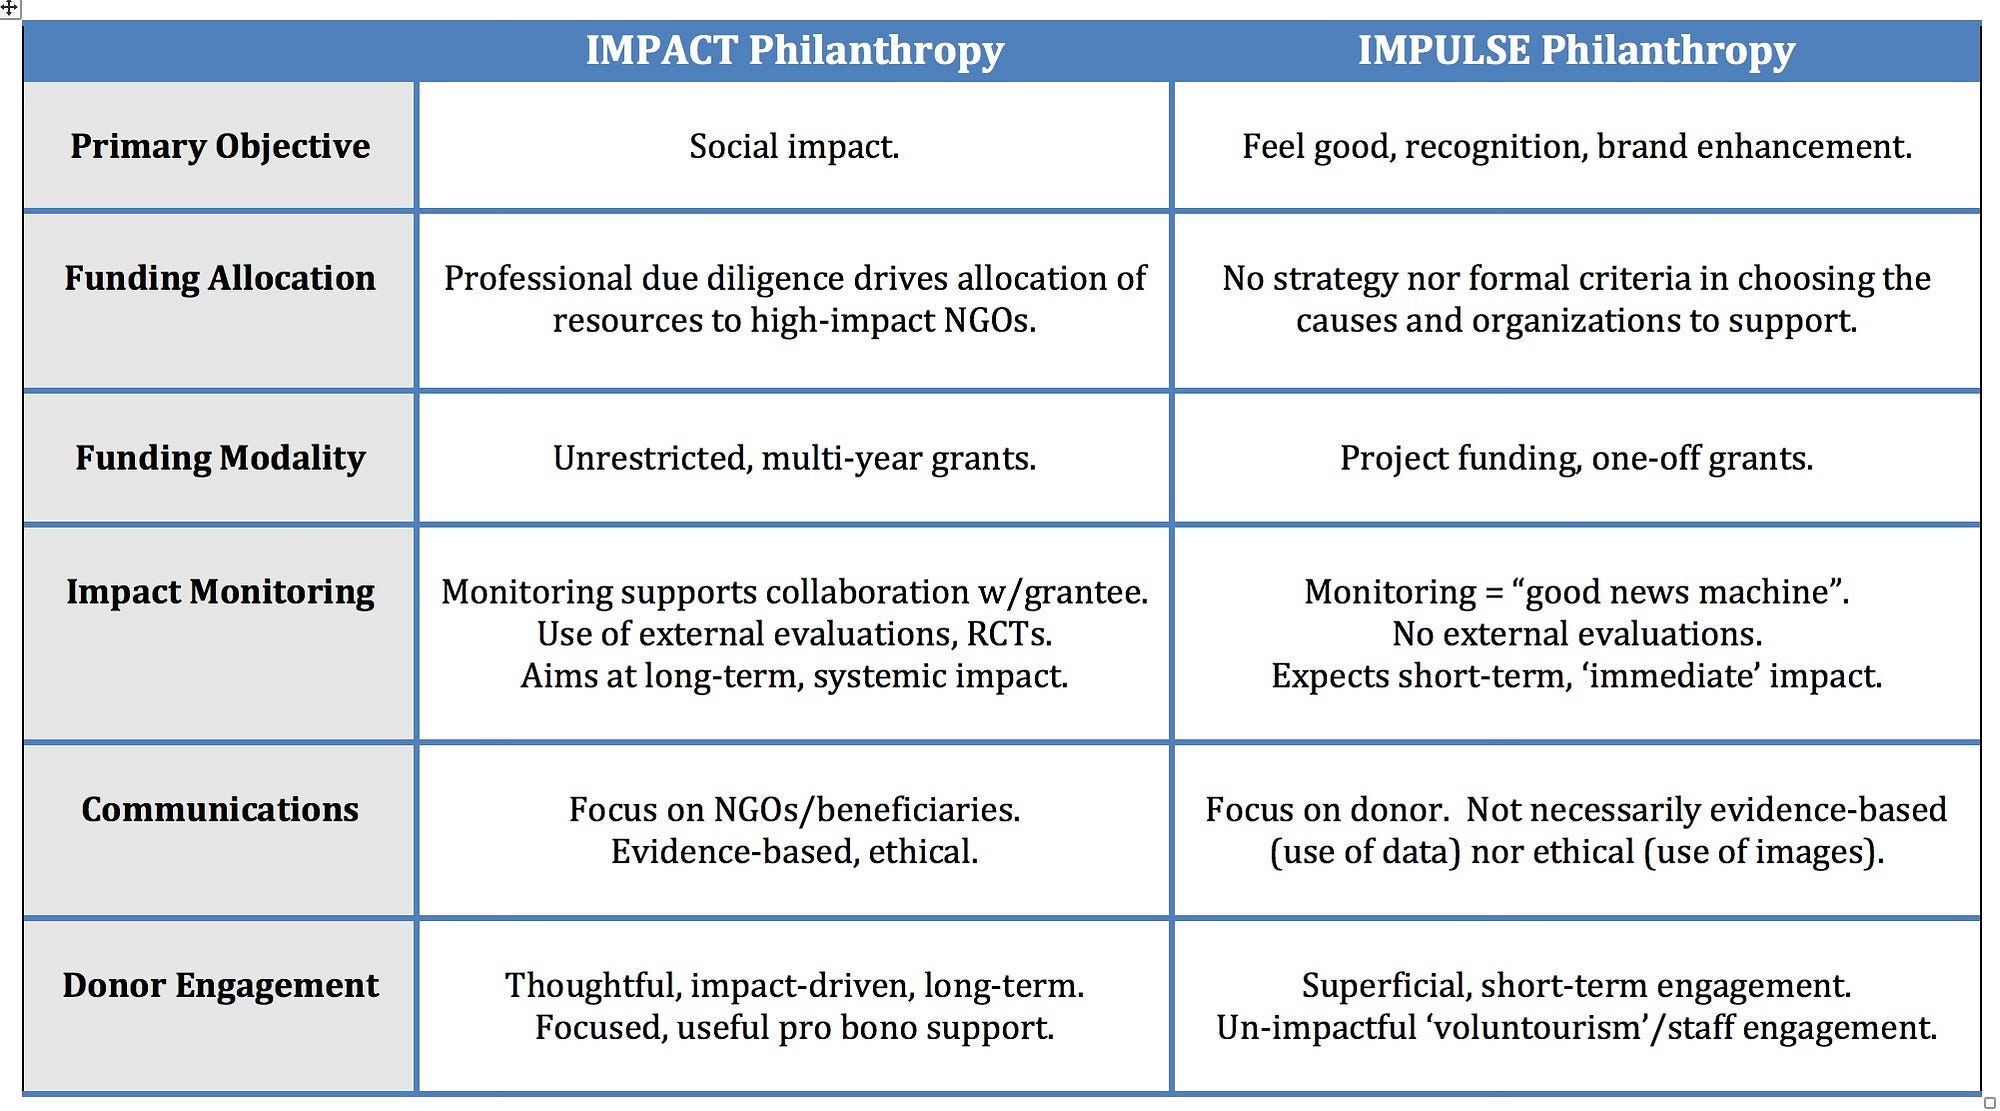 think before you give: impact philanthropy vs impulse philanthropy